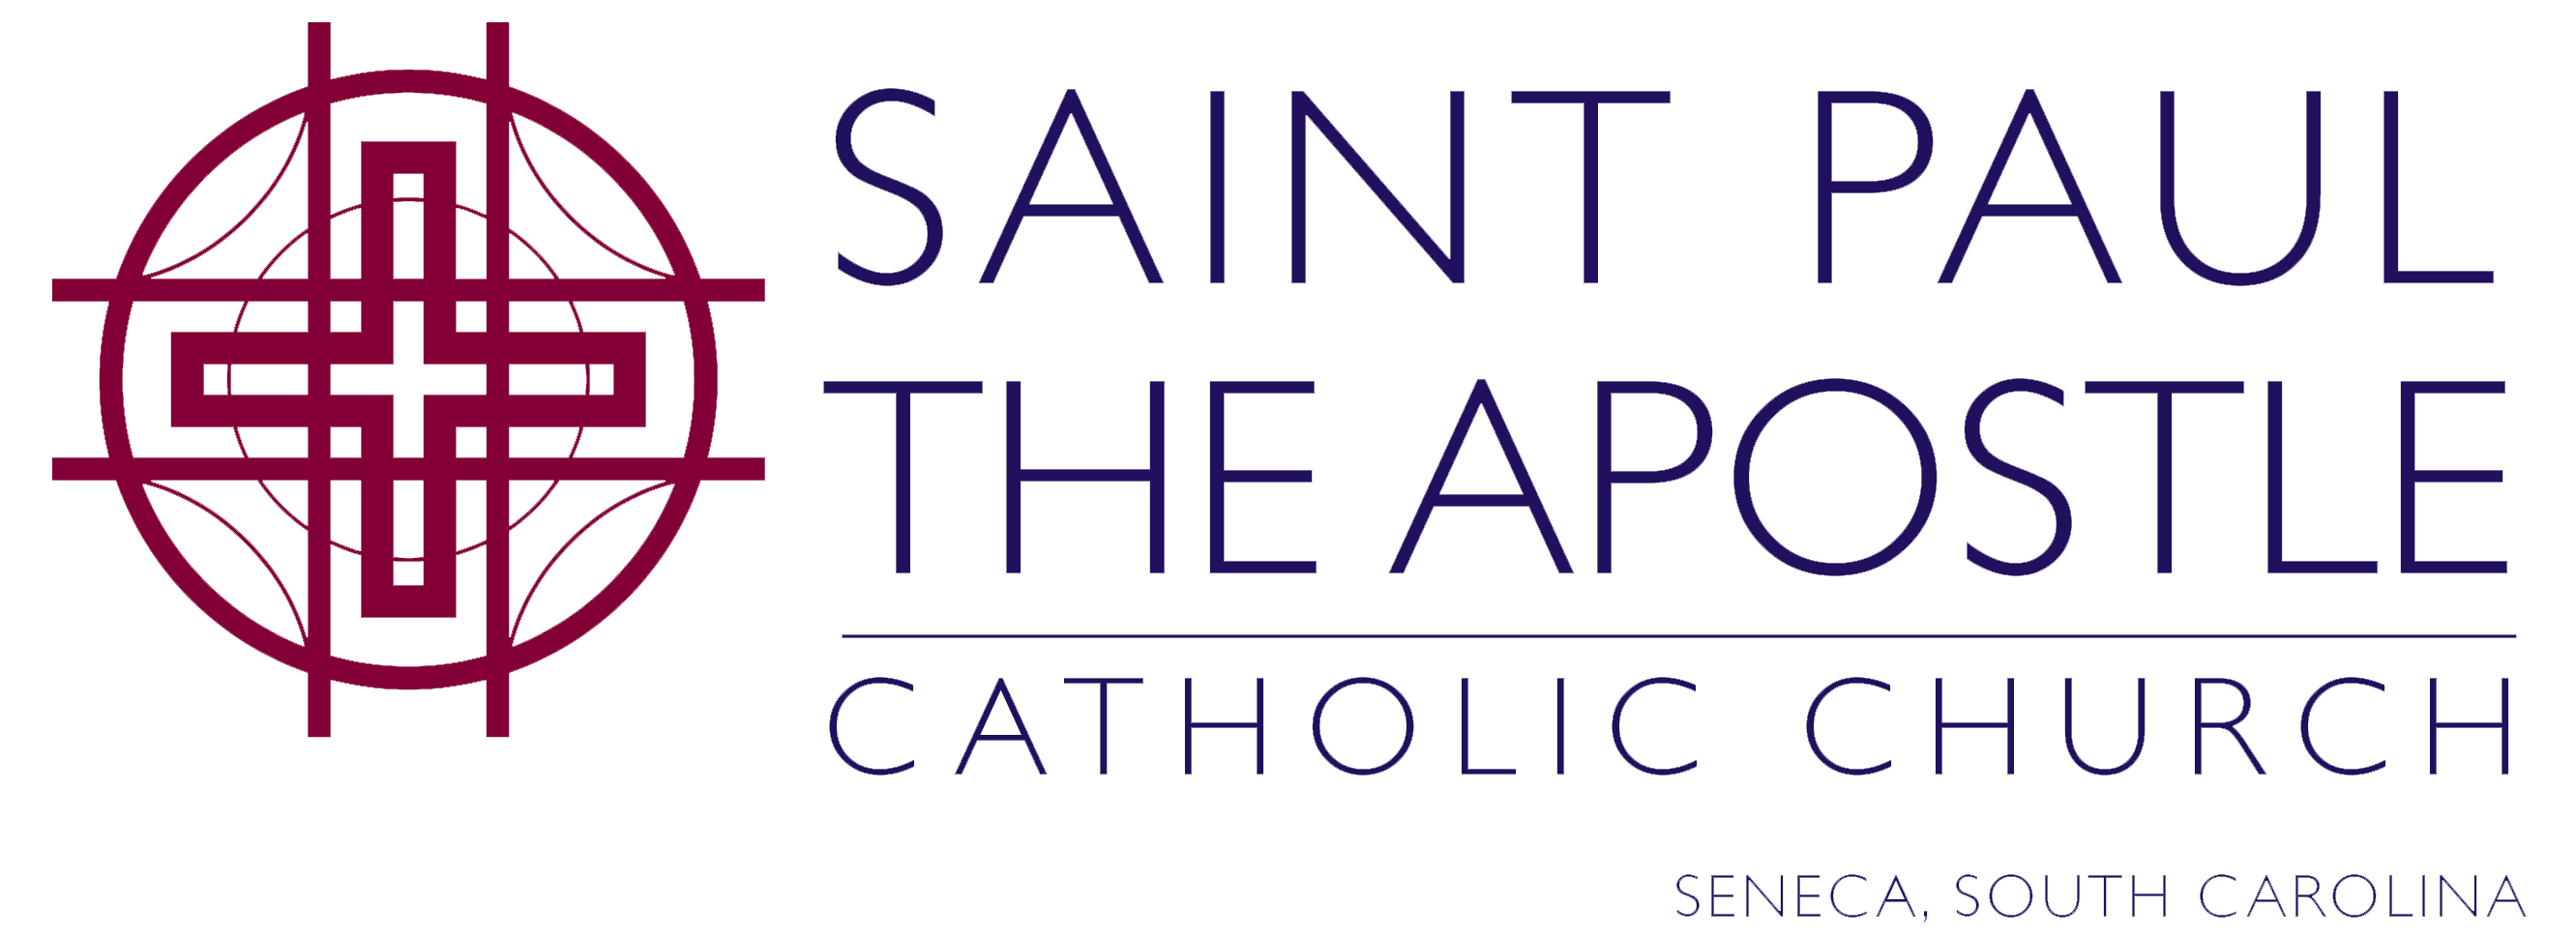 Saint Paul the Apostle Catholic Church